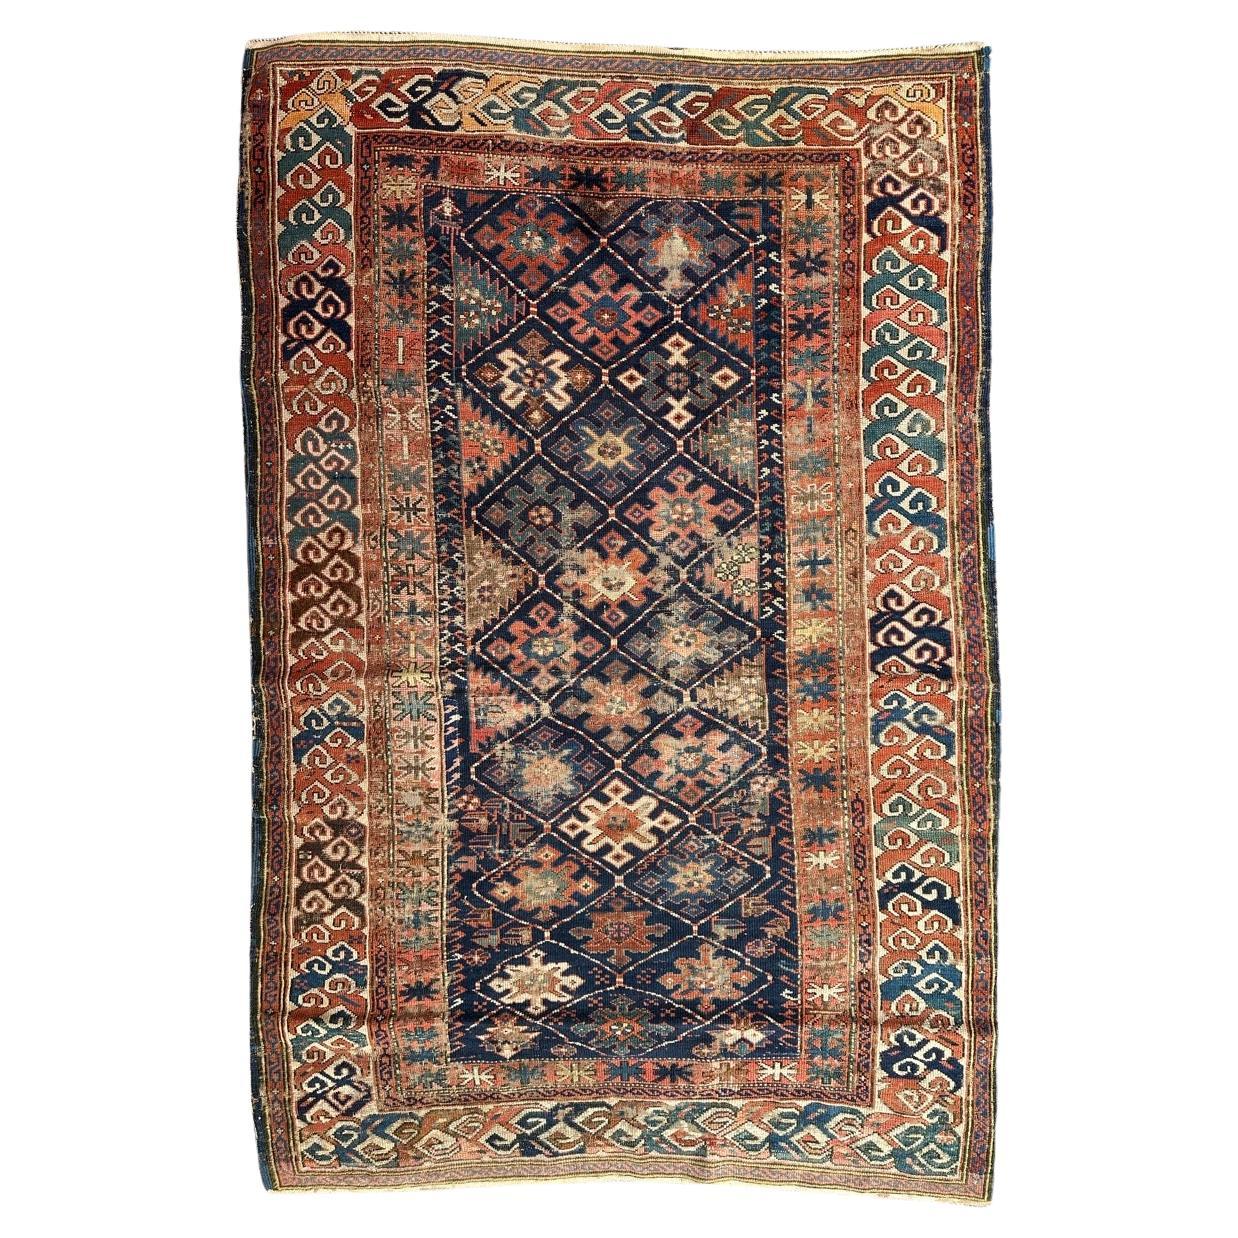 Bobyrug’s pretty late 19th century Caucasian shirvan rug